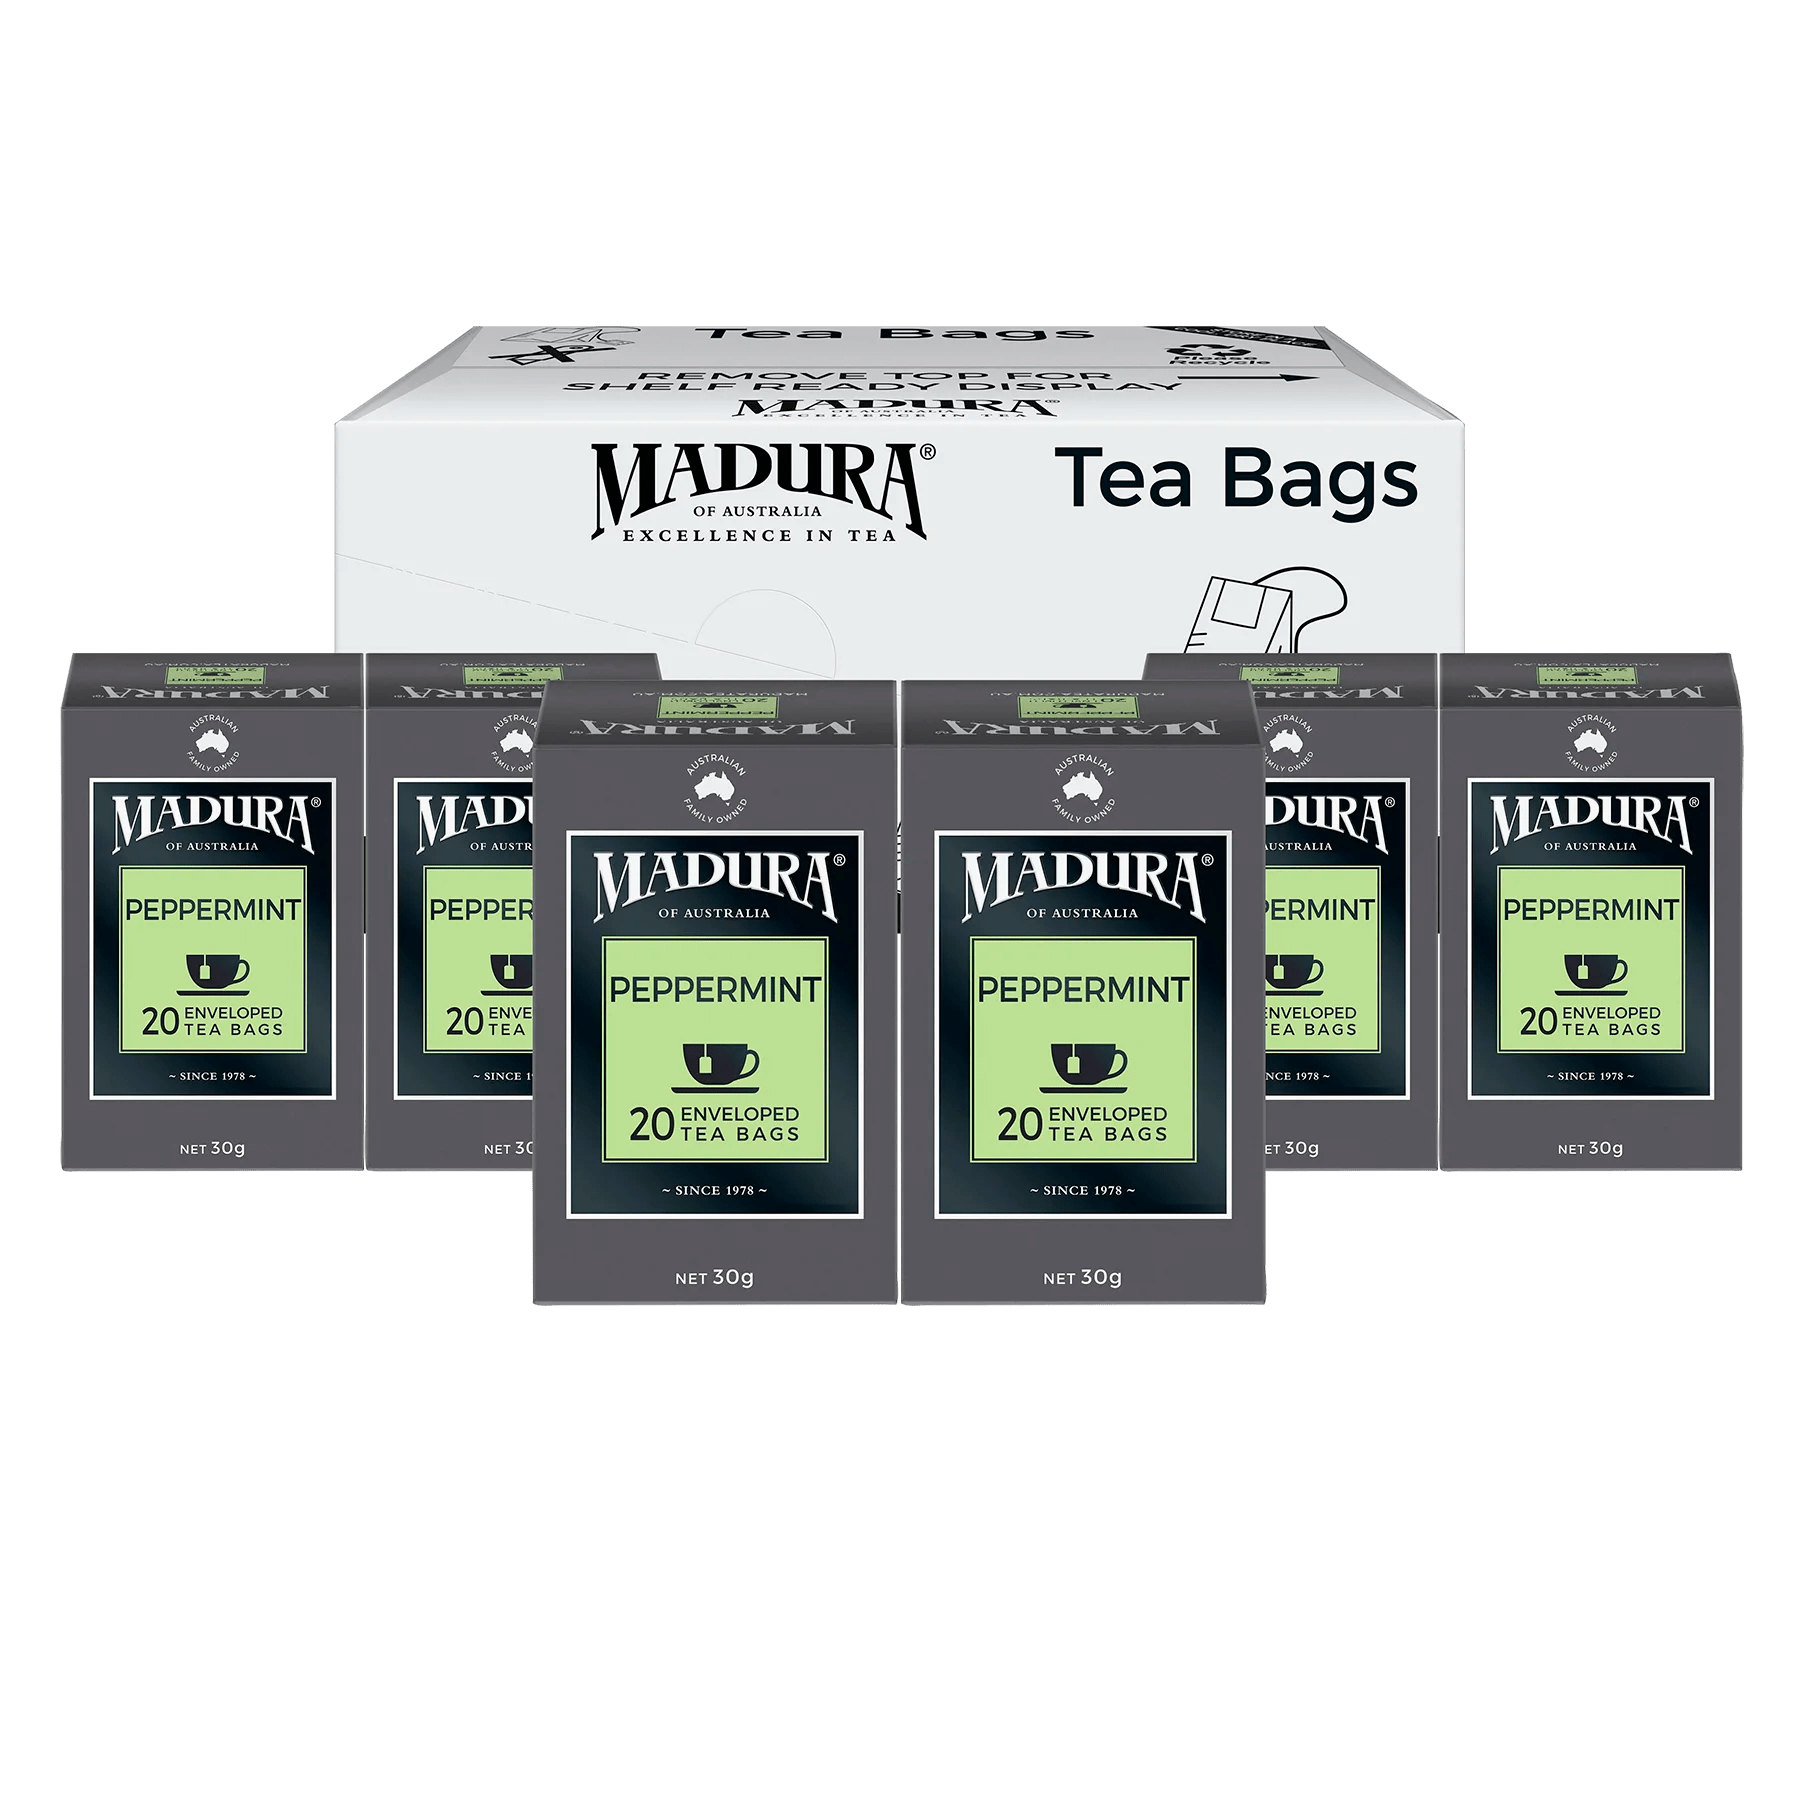 Peppermint 20 Enveloped Tea Bags - Madura Tea